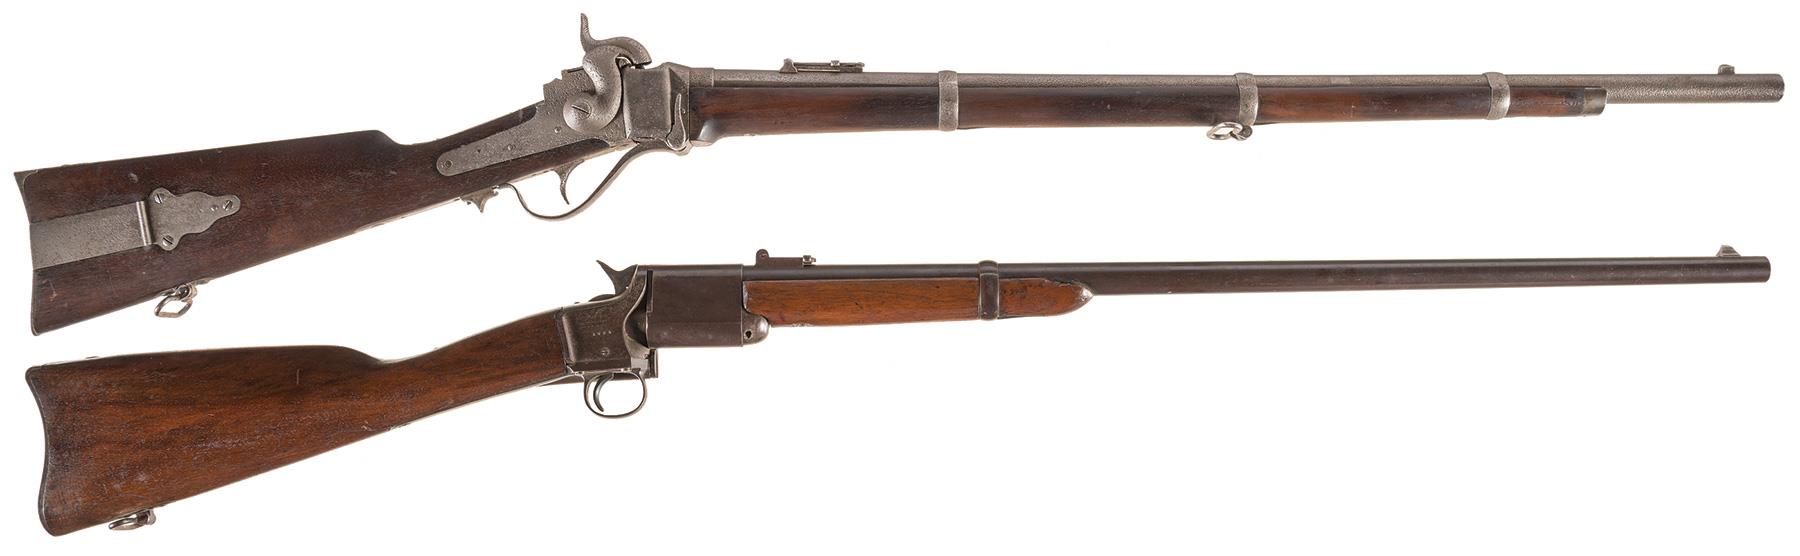 Two Civil War Breech Loading Rifles | Rock Island Auction